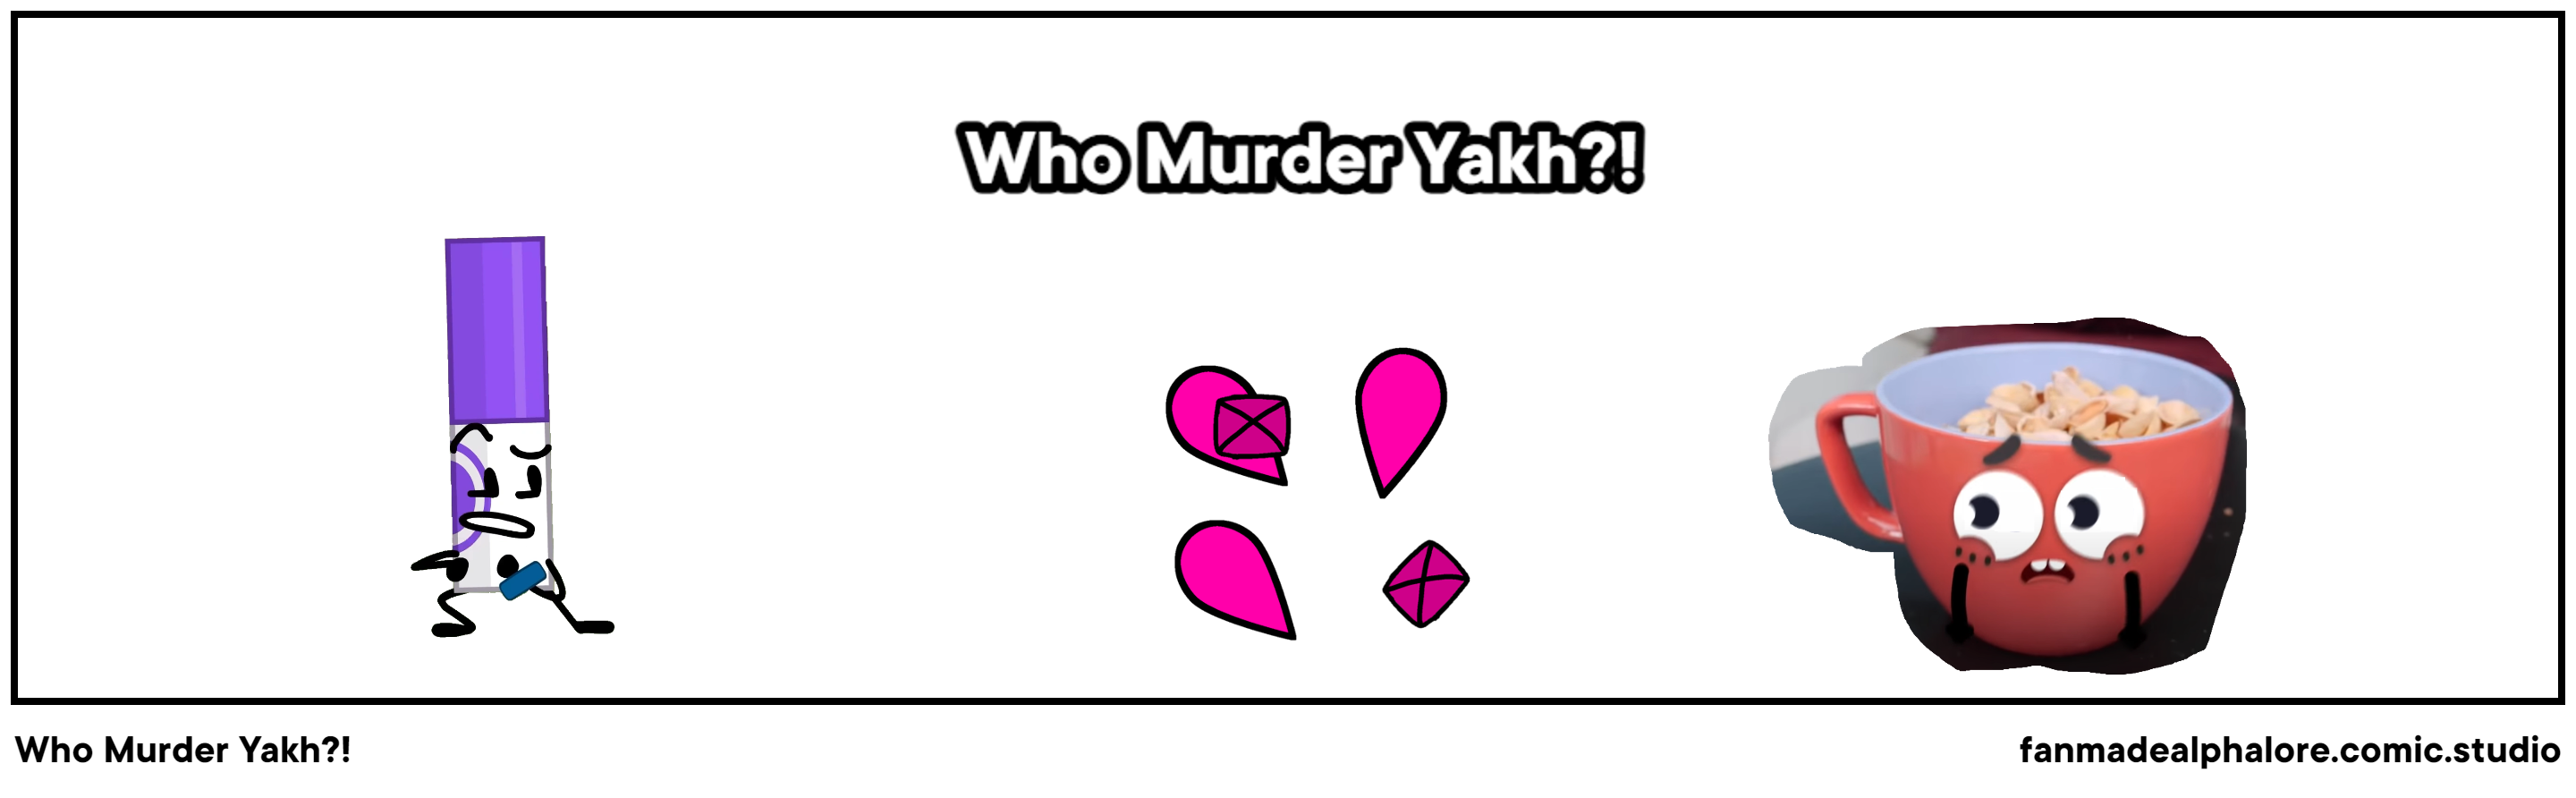 Who Murder Yakh?!